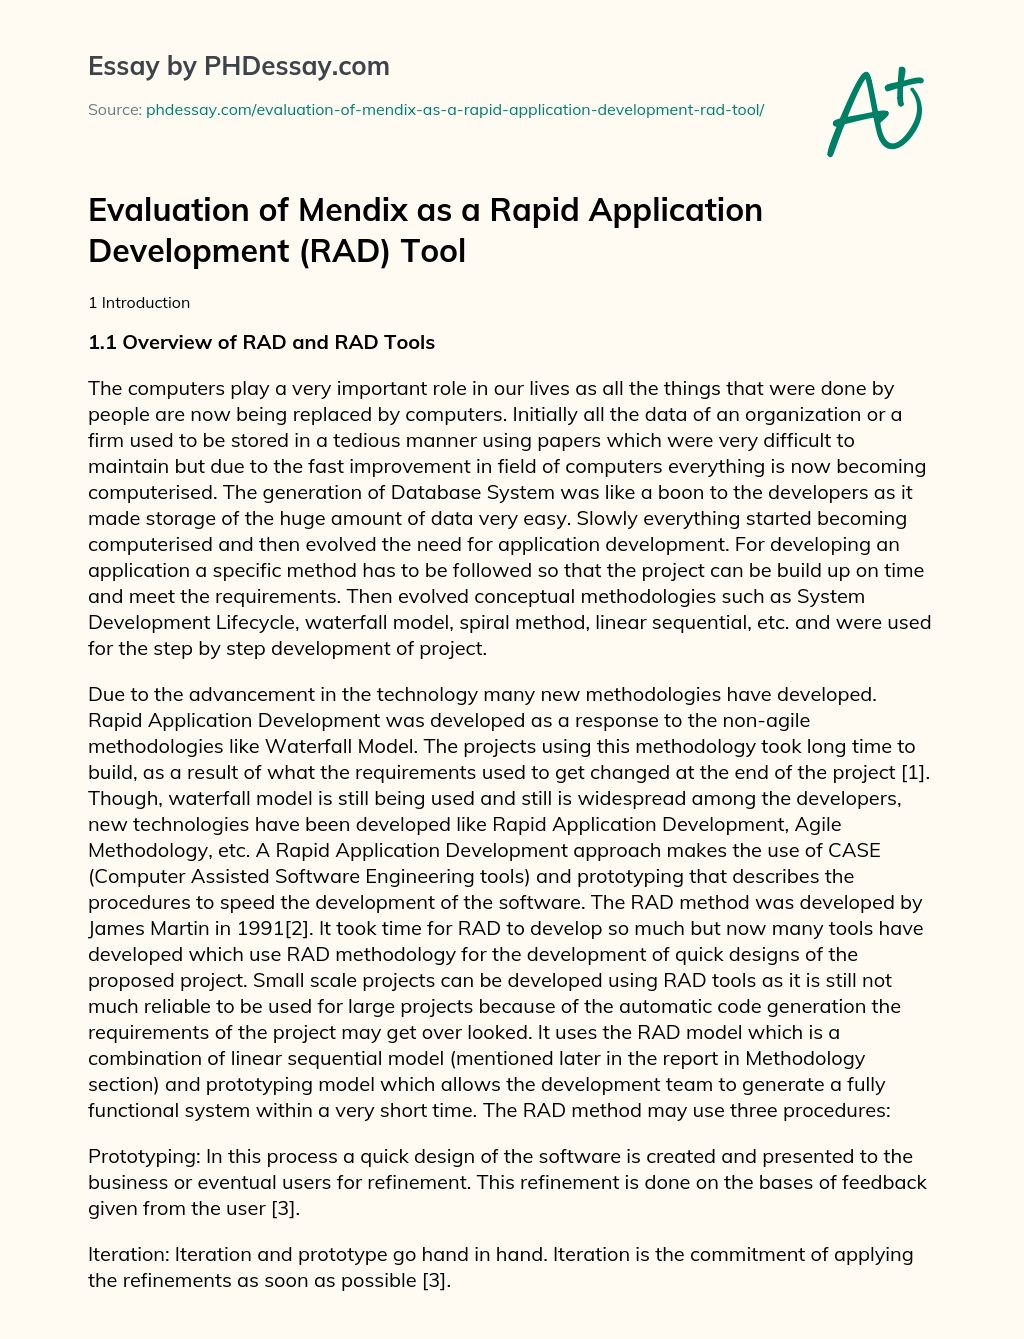 Evaluation of Mendix as a Rapid Application Development (RAD) Tool essay